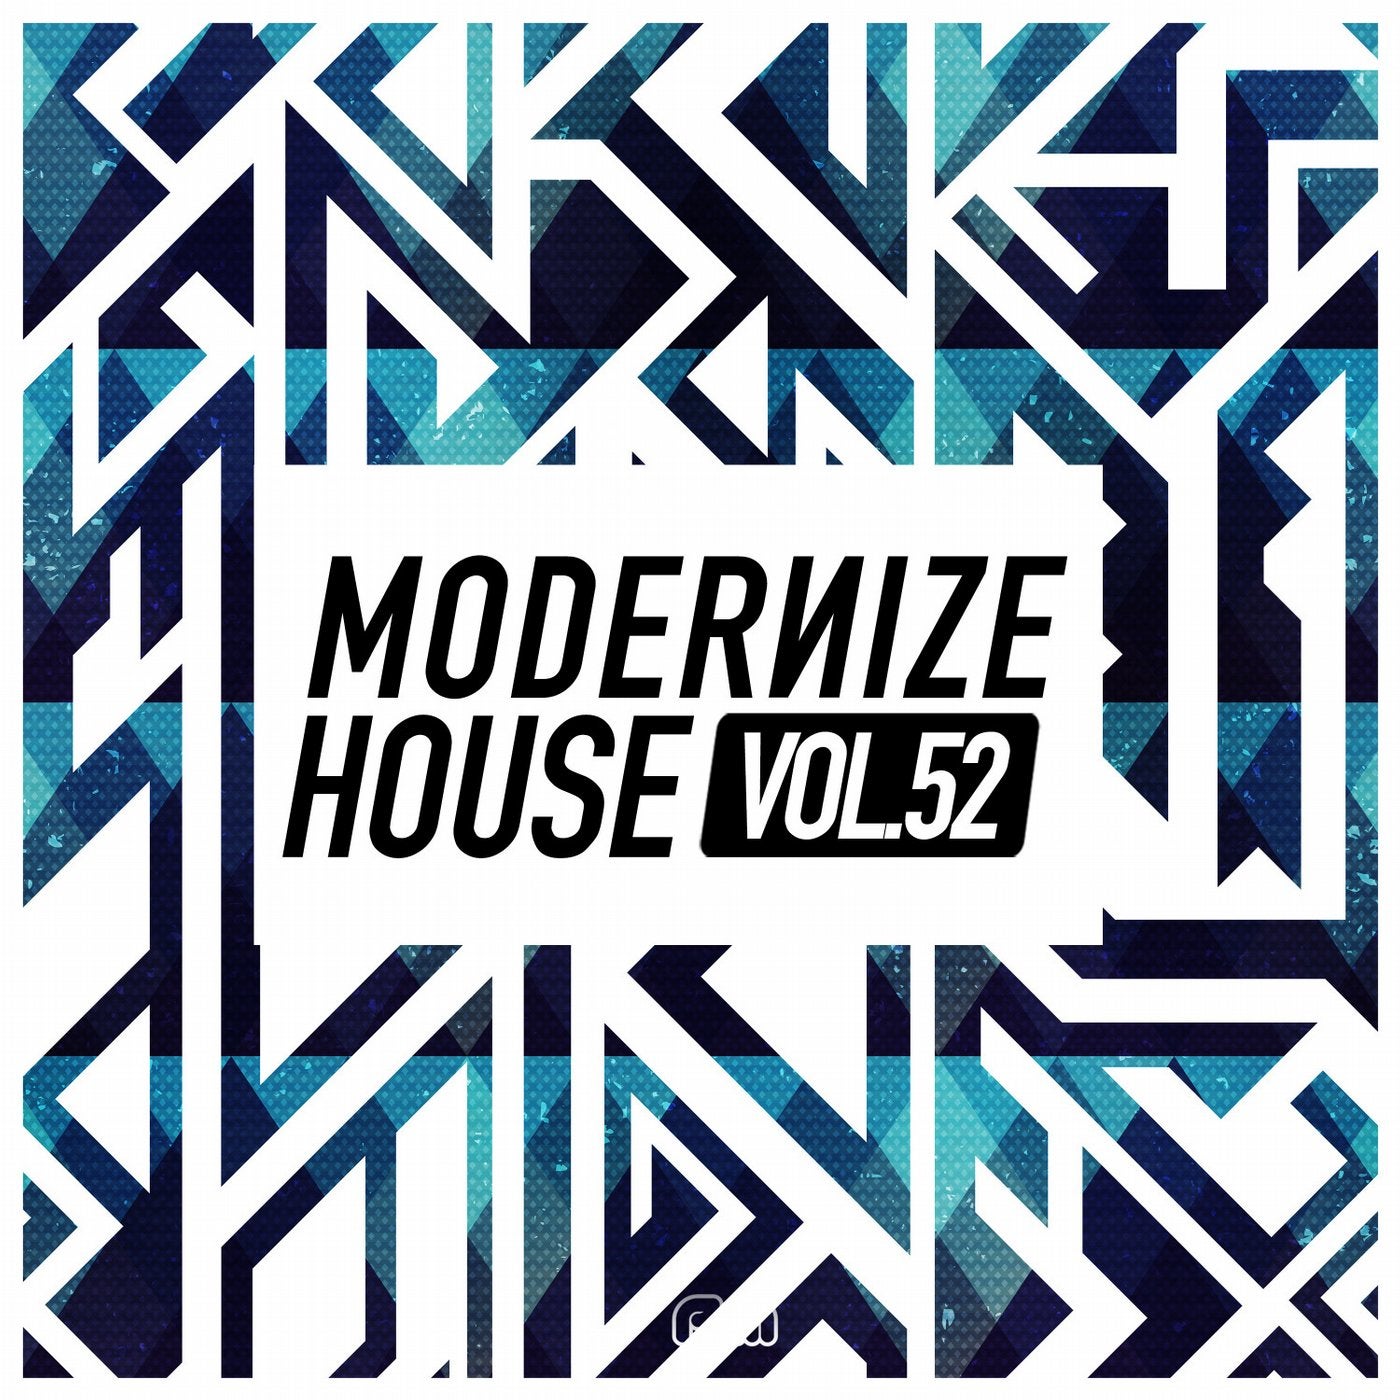 Modernize House Vol. 52